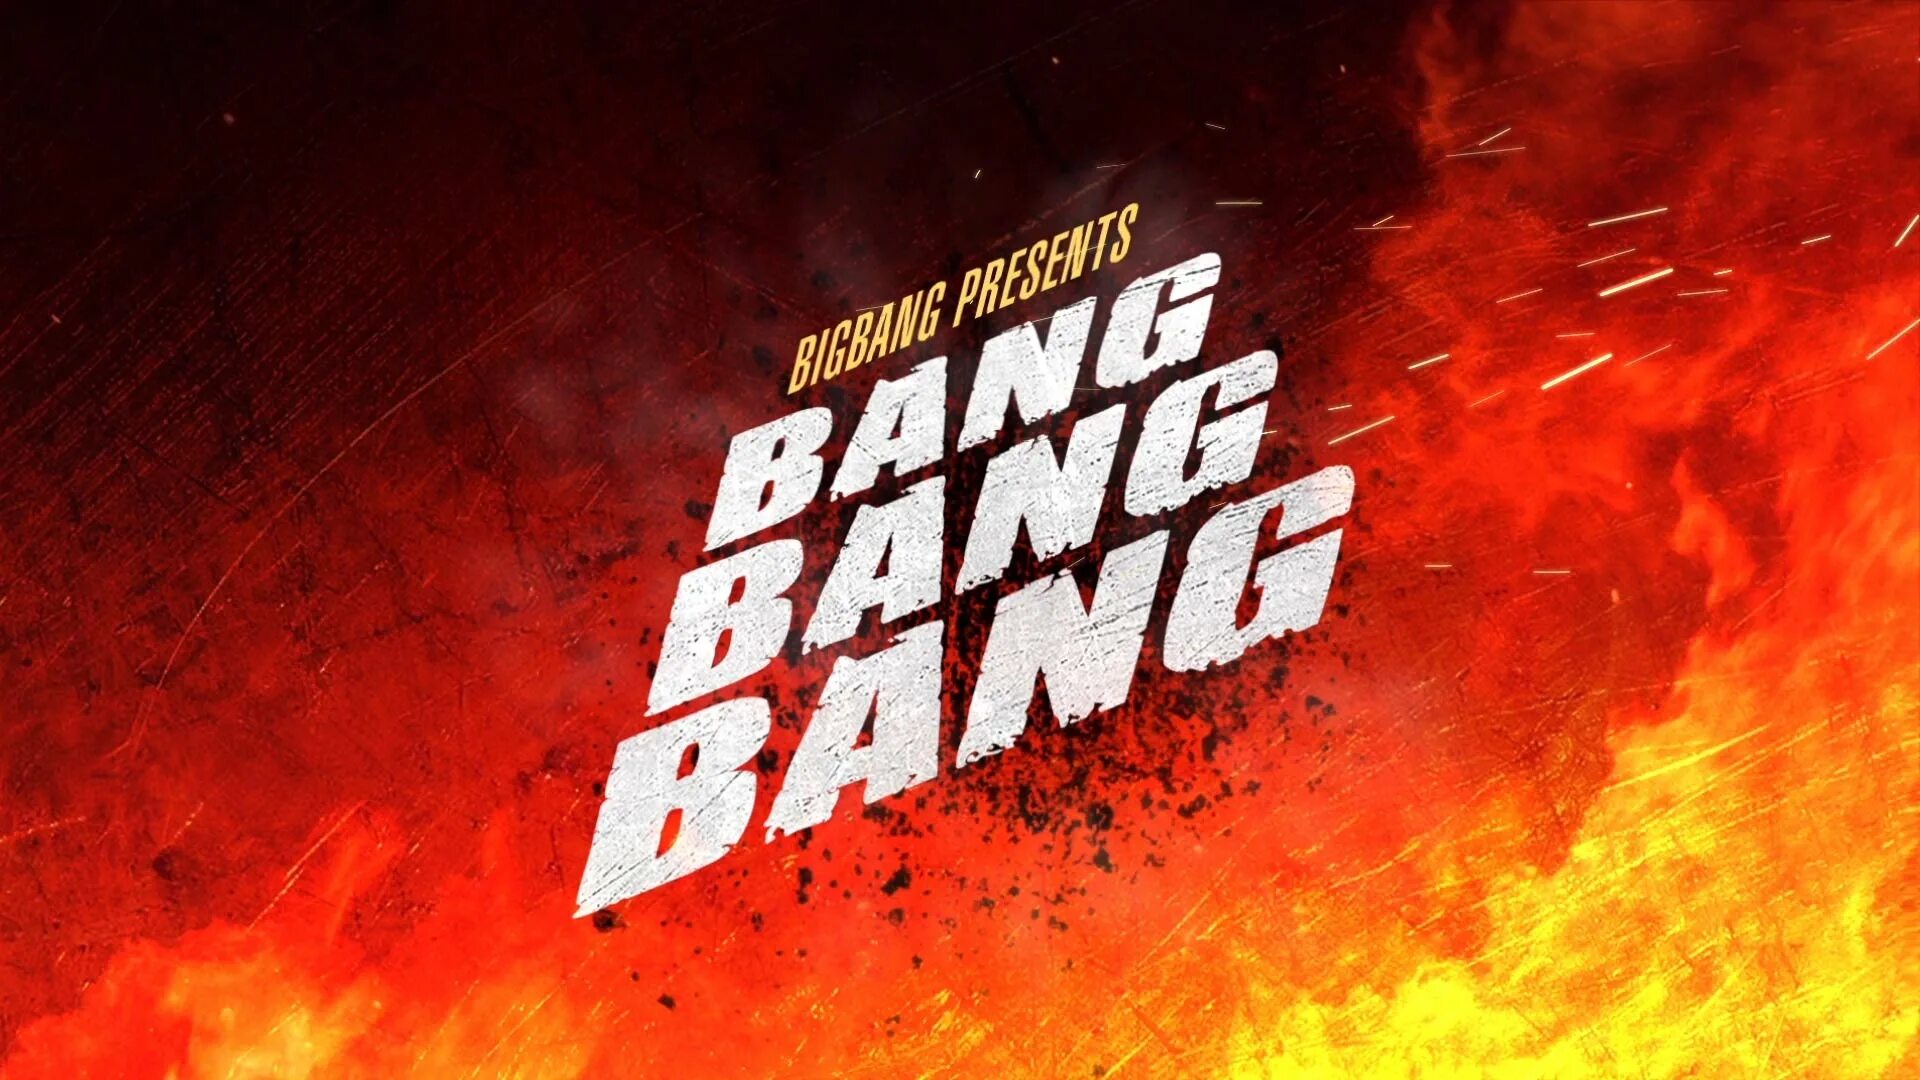 Bigbang bang bang bang